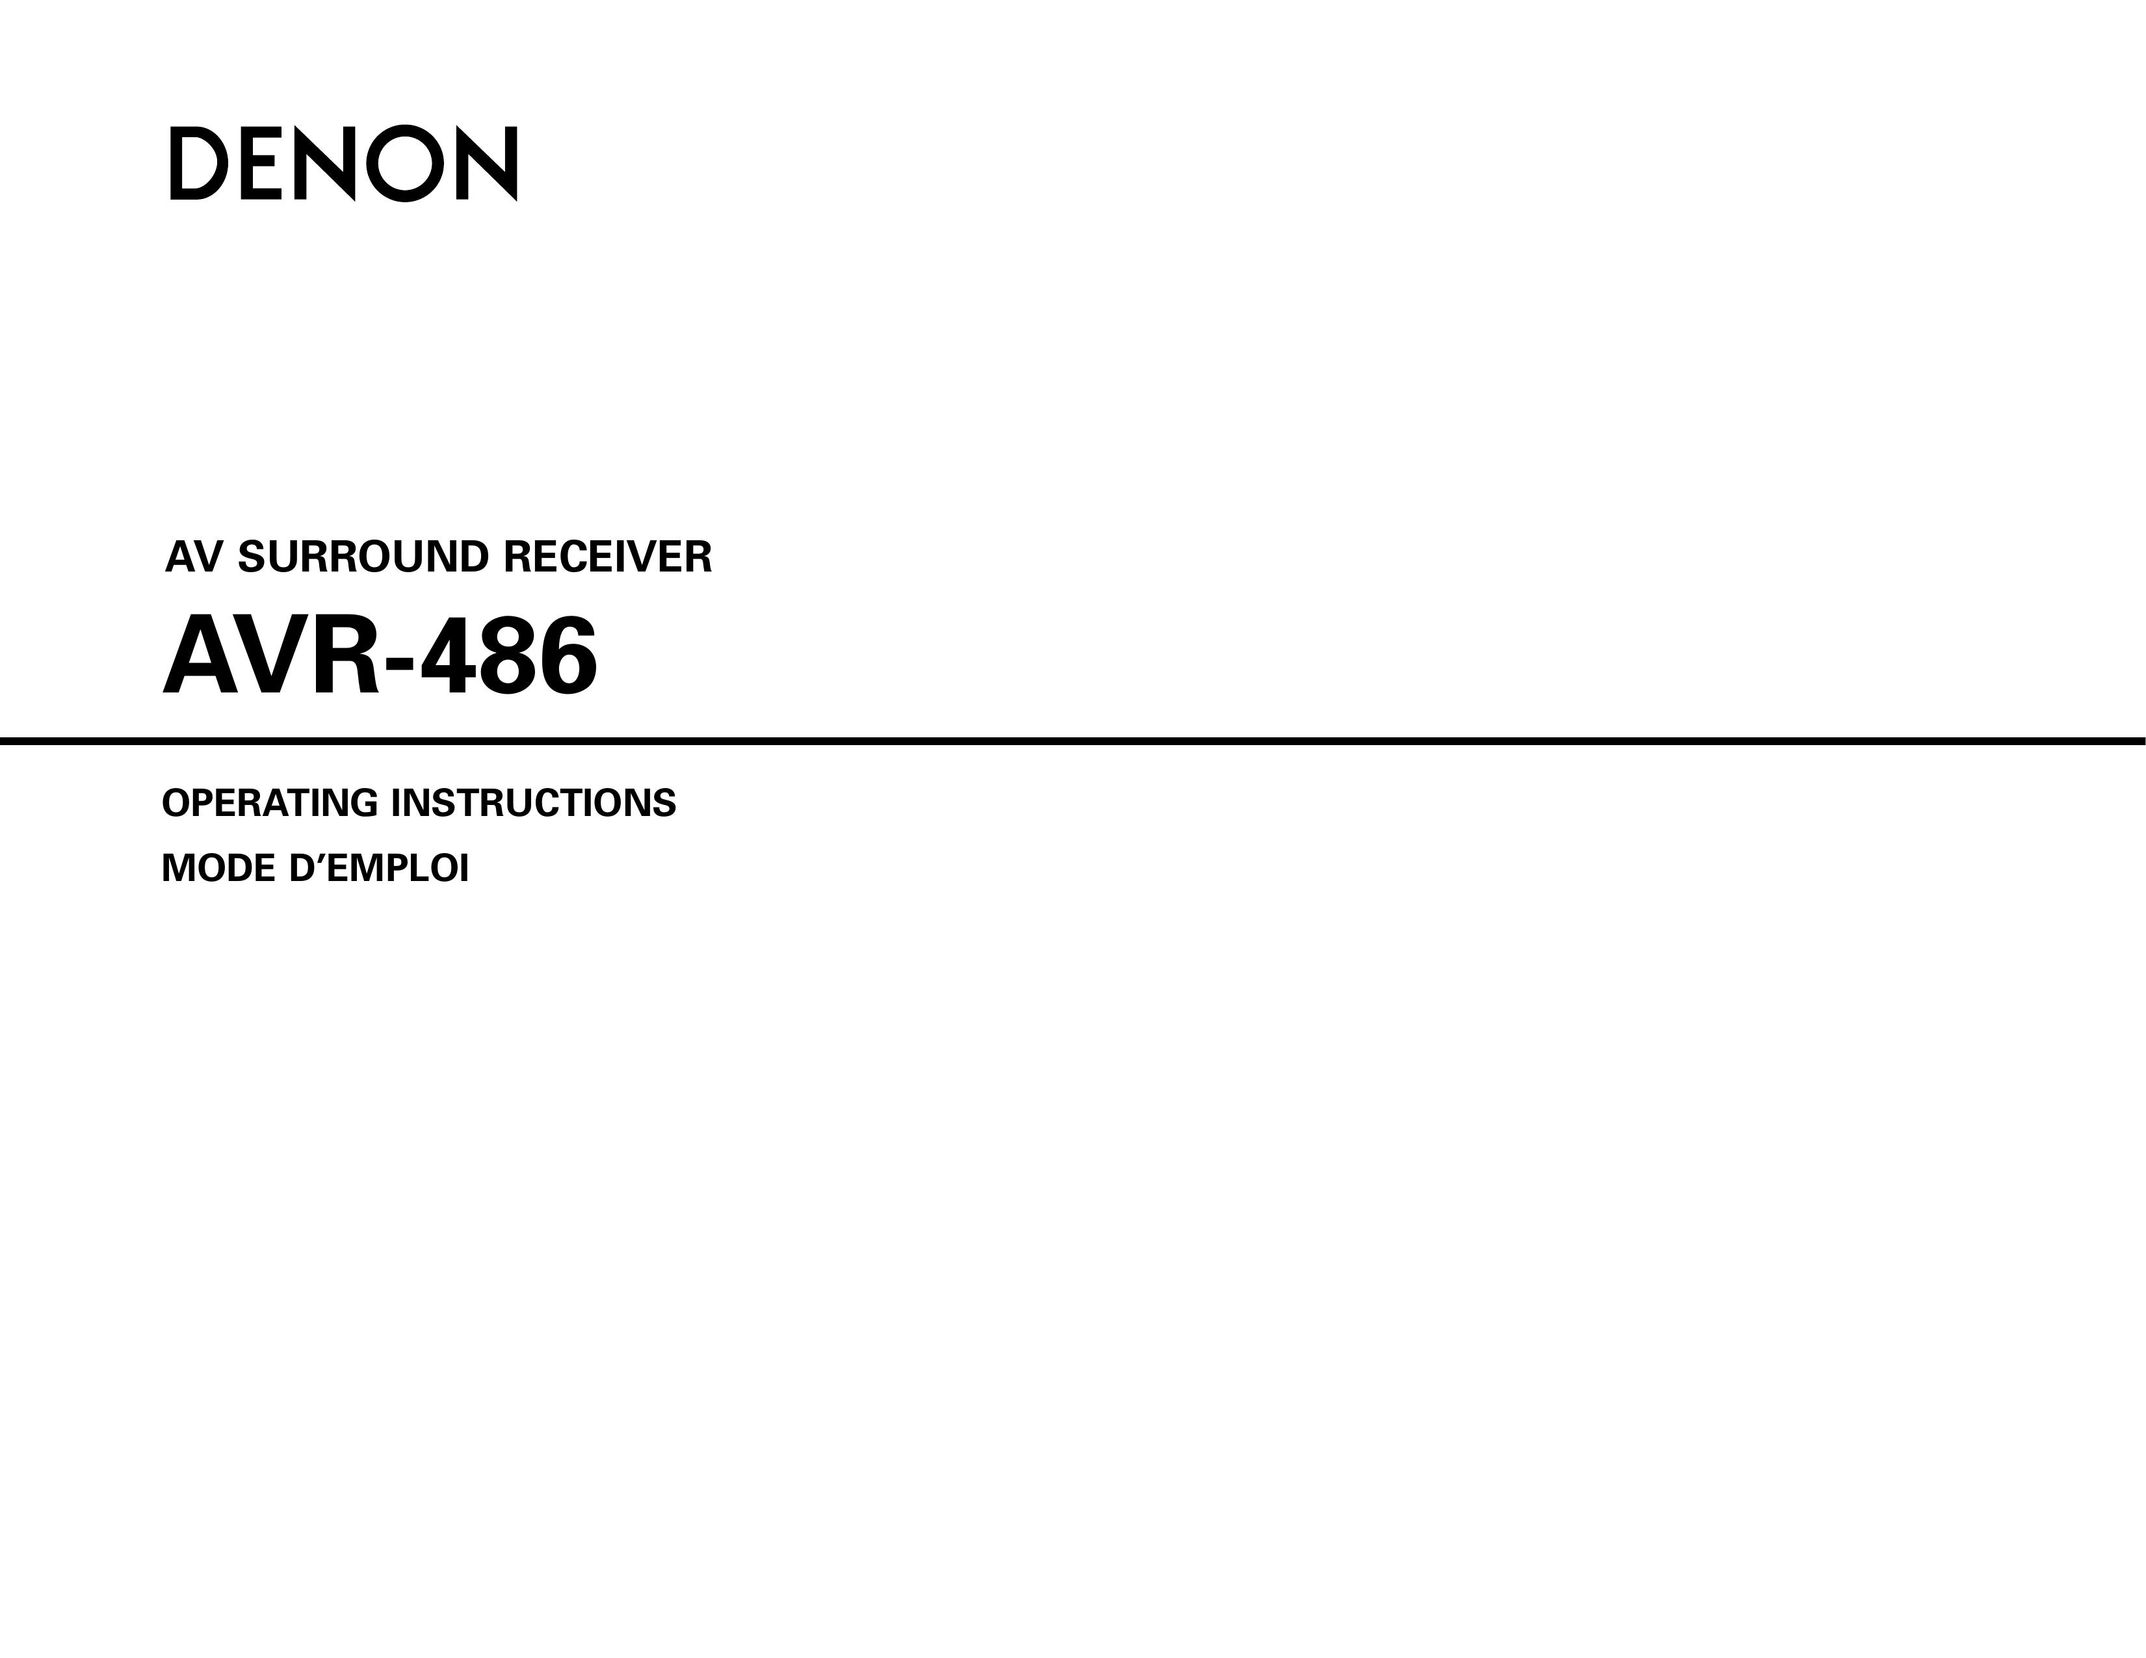 Denon AVR-486 Stereo Receiver User Manual